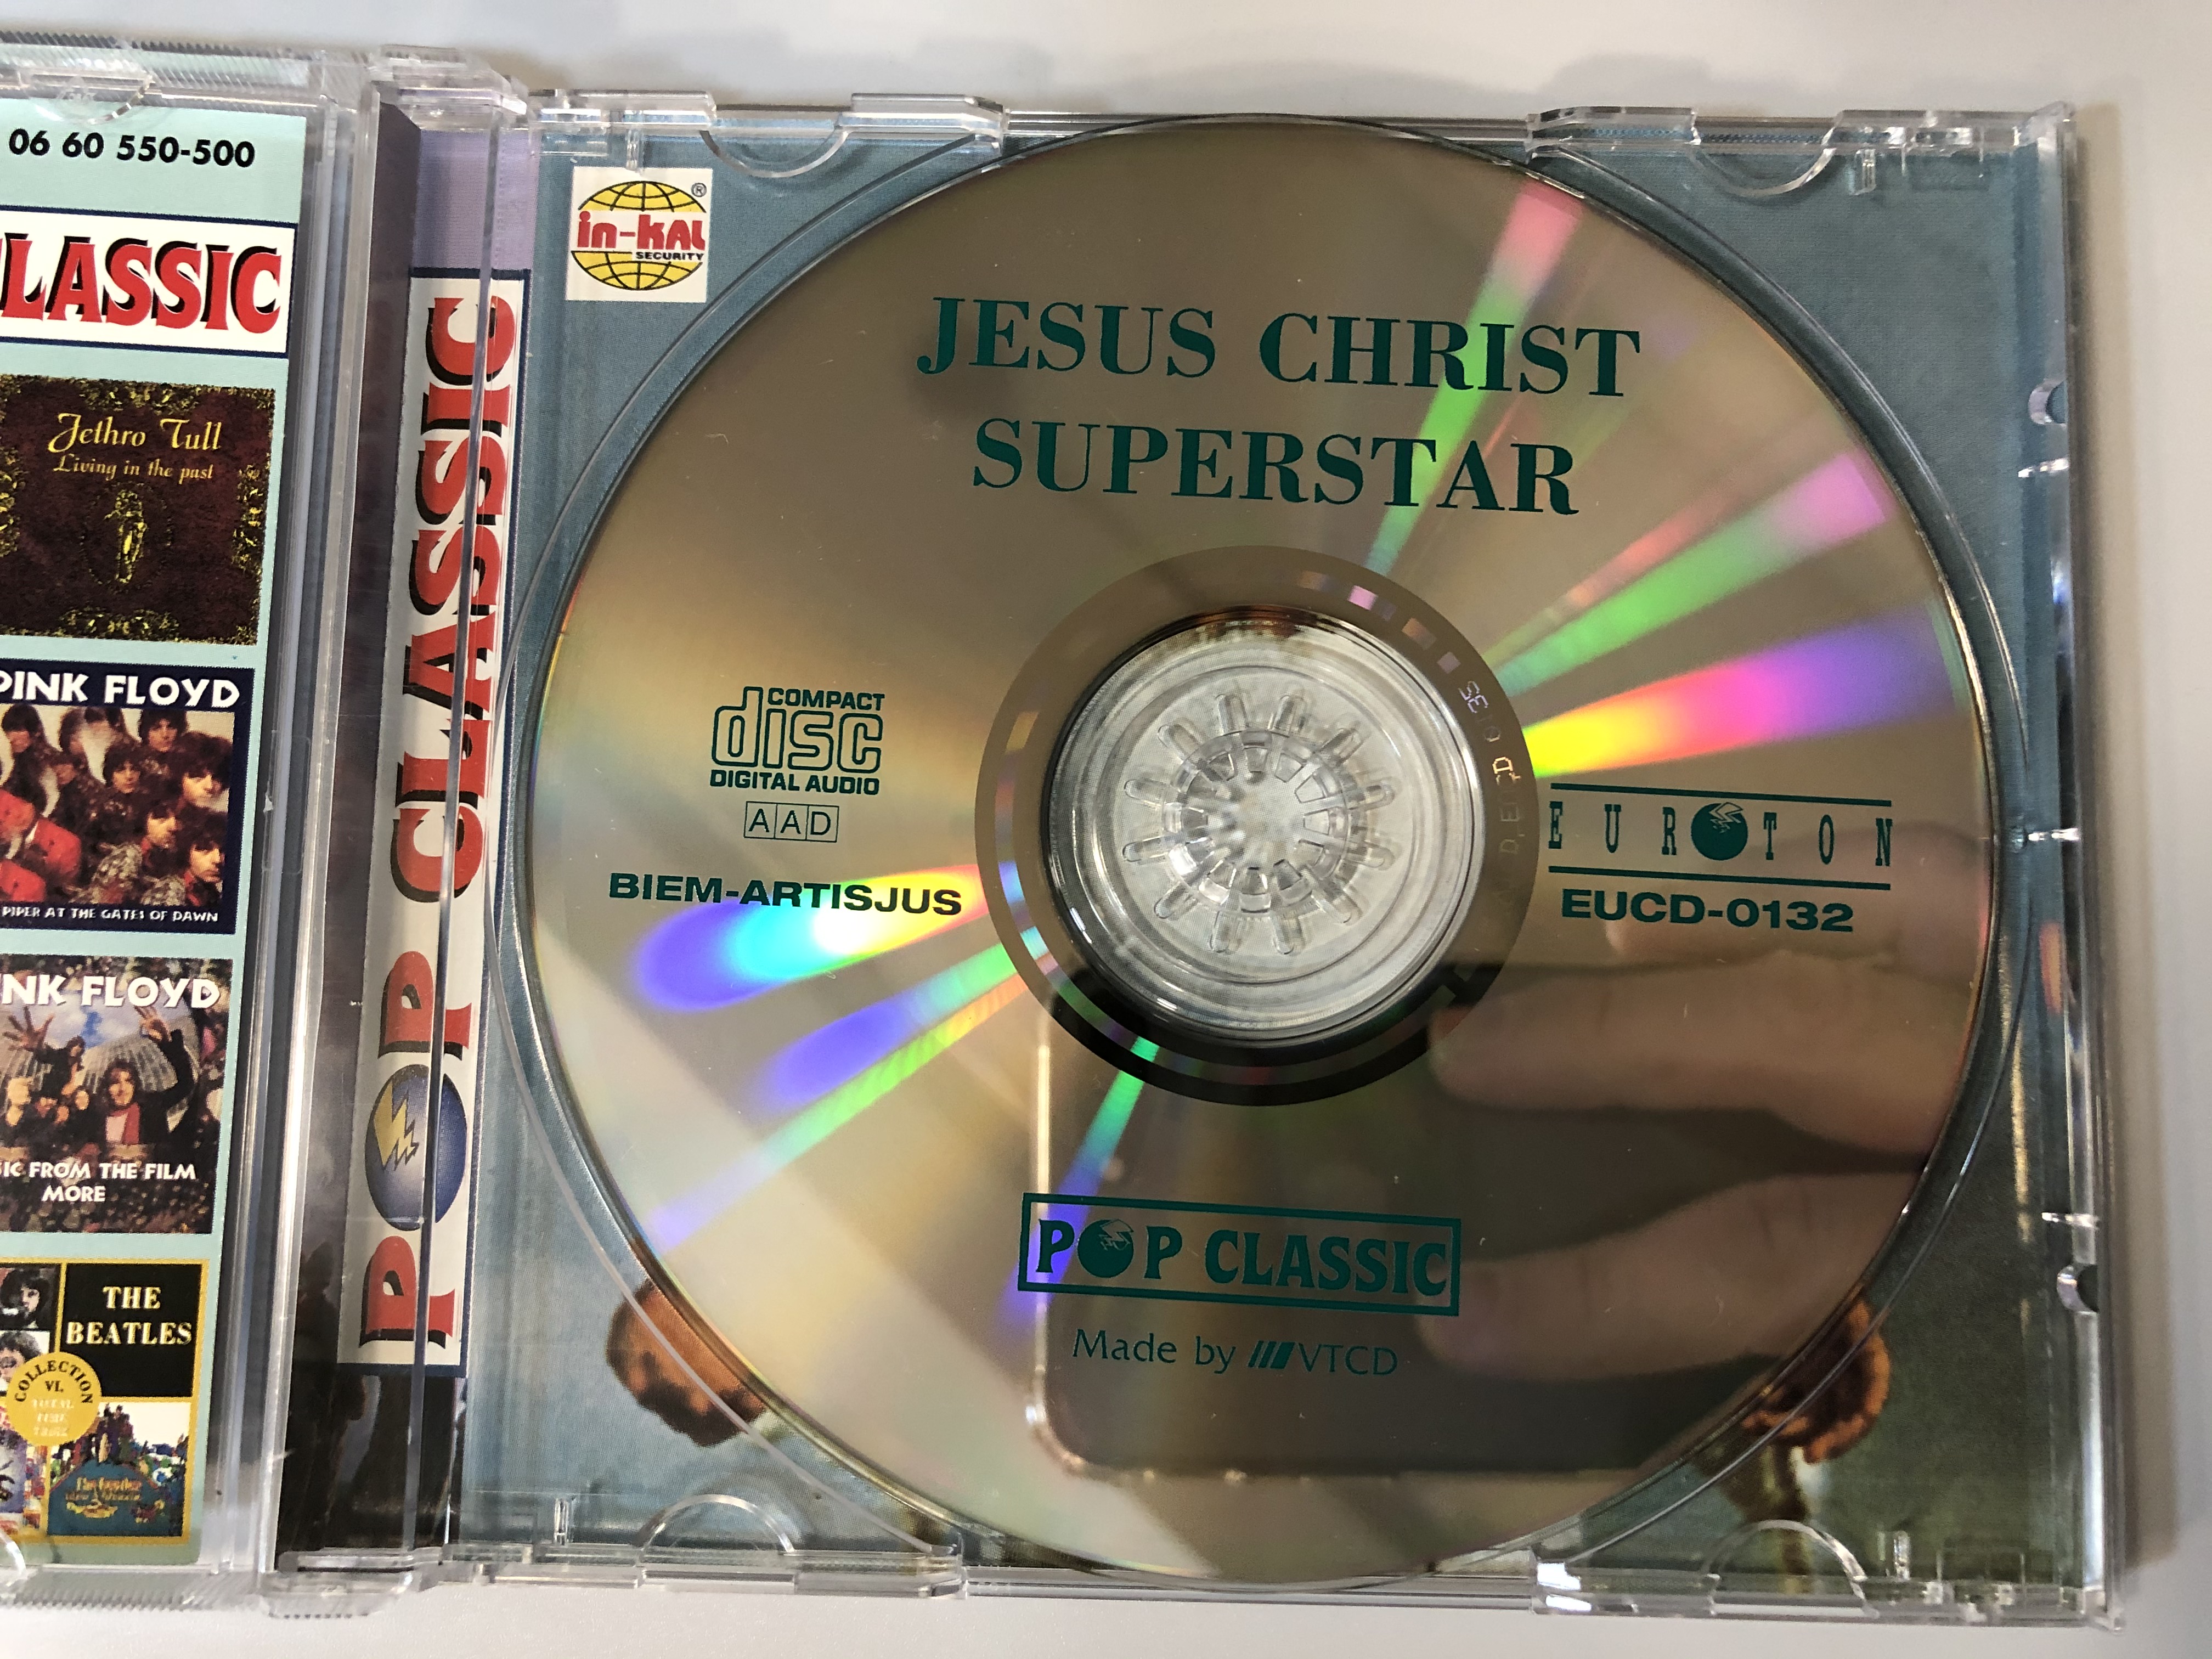 jesus-christ-superstar-the-original-motion-picture-soundtrack-album-pop-classic-euroton-audio-cd-eucd-0132-2-.jpg